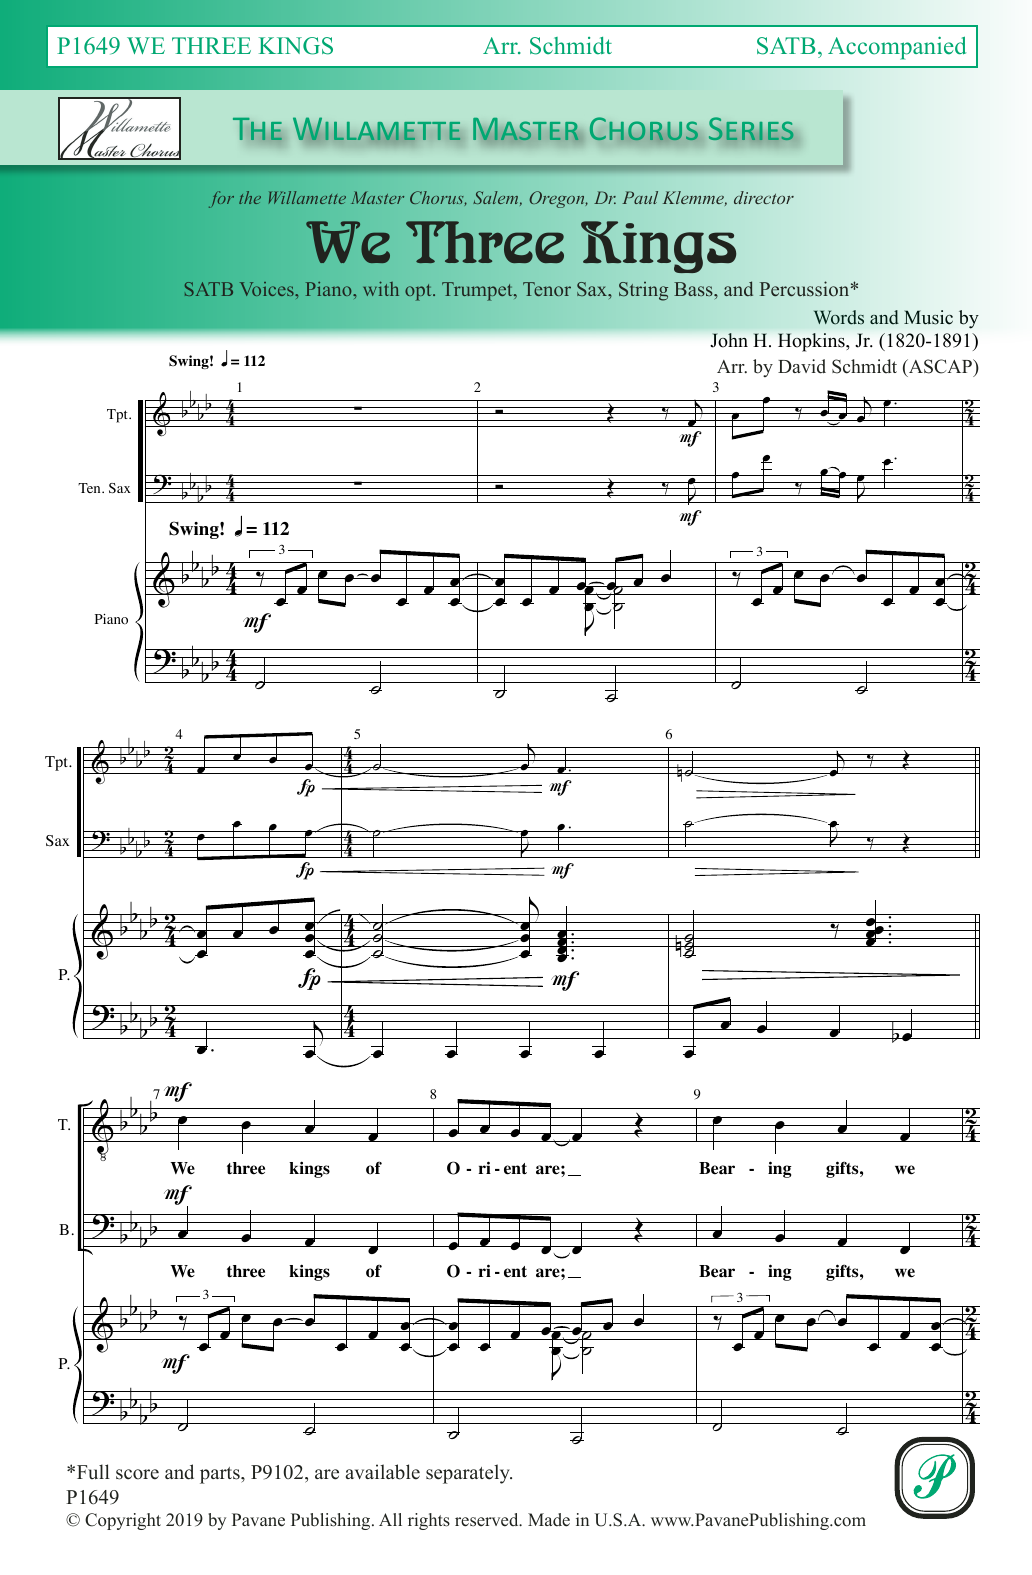 Download John H. Hopkins, Jr. We Three Kings (arr. David Schmidt) Sheet Music and learn how to play SATB Choir PDF digital score in minutes